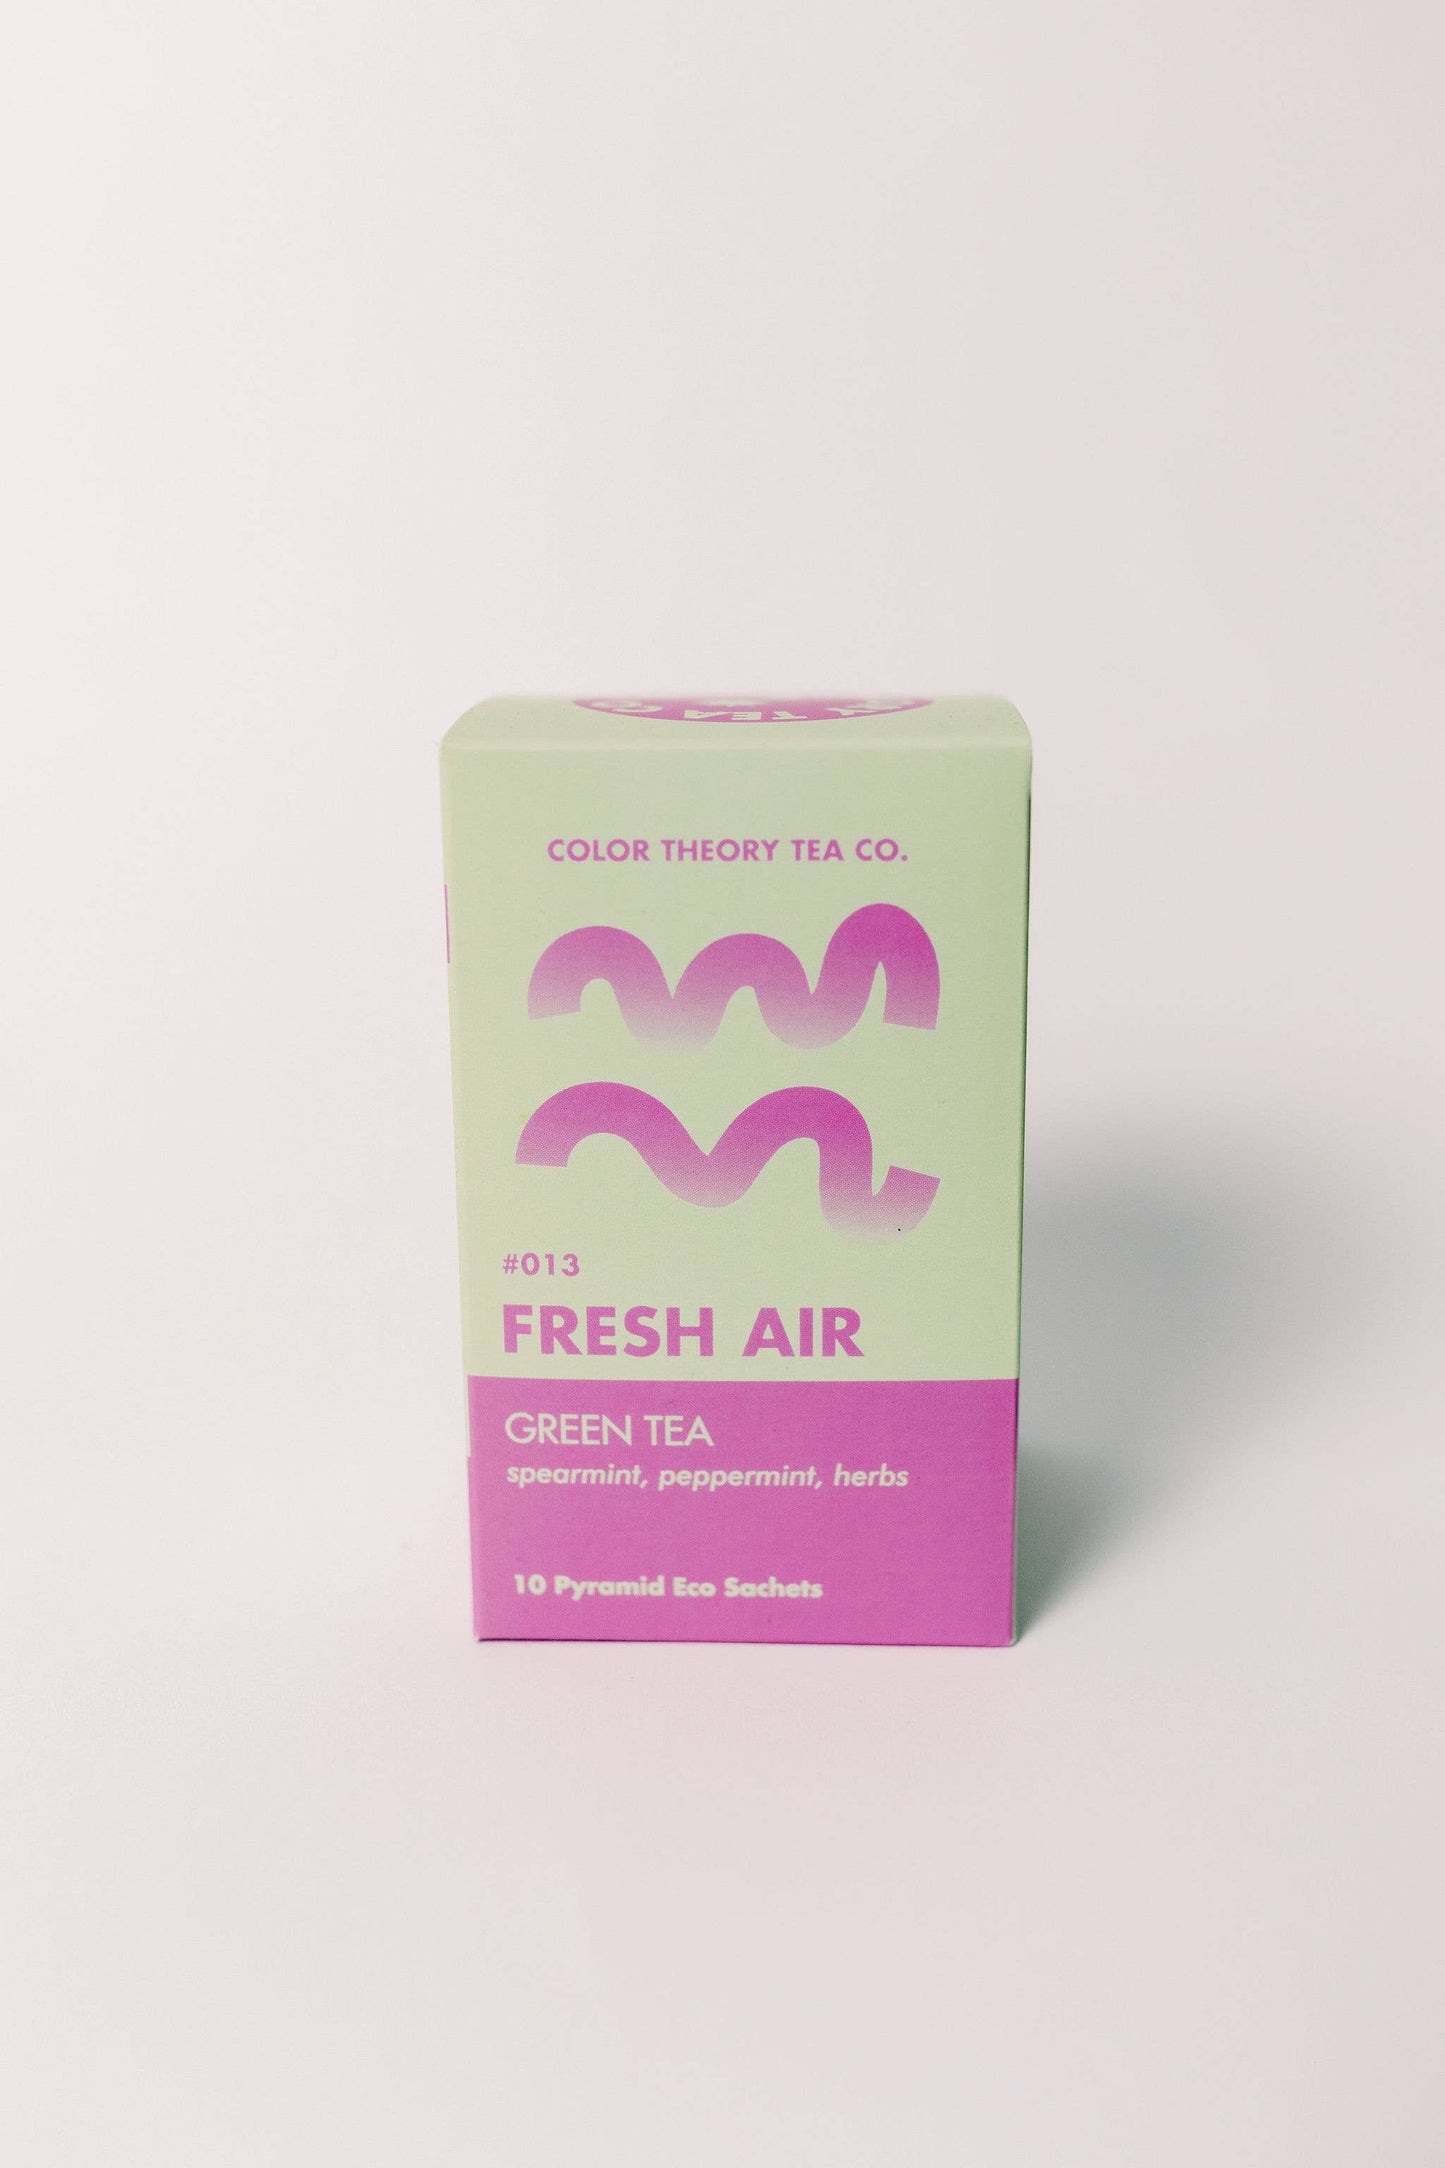 Fresh Air: Color Theory Tea Co.